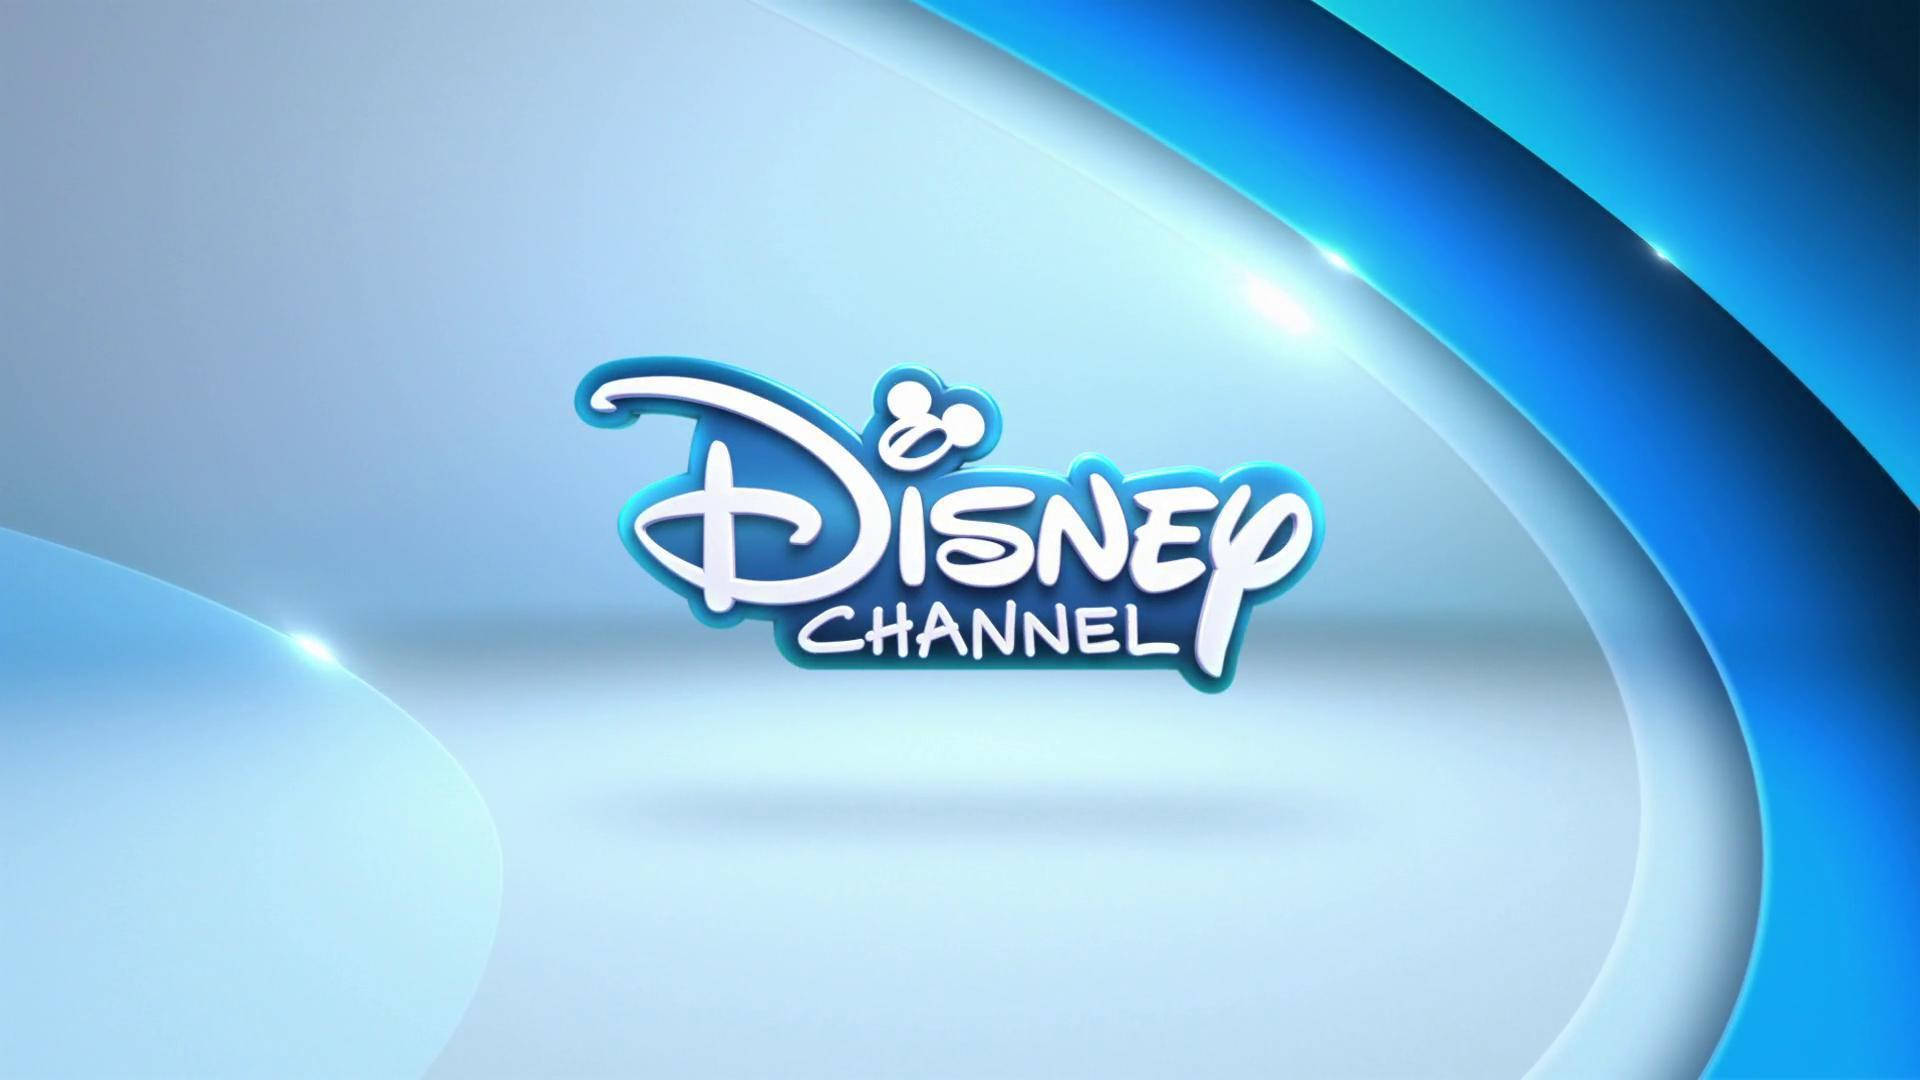 Disneyxd Antiguo Logotipo En Color Azul Fondo de pantalla